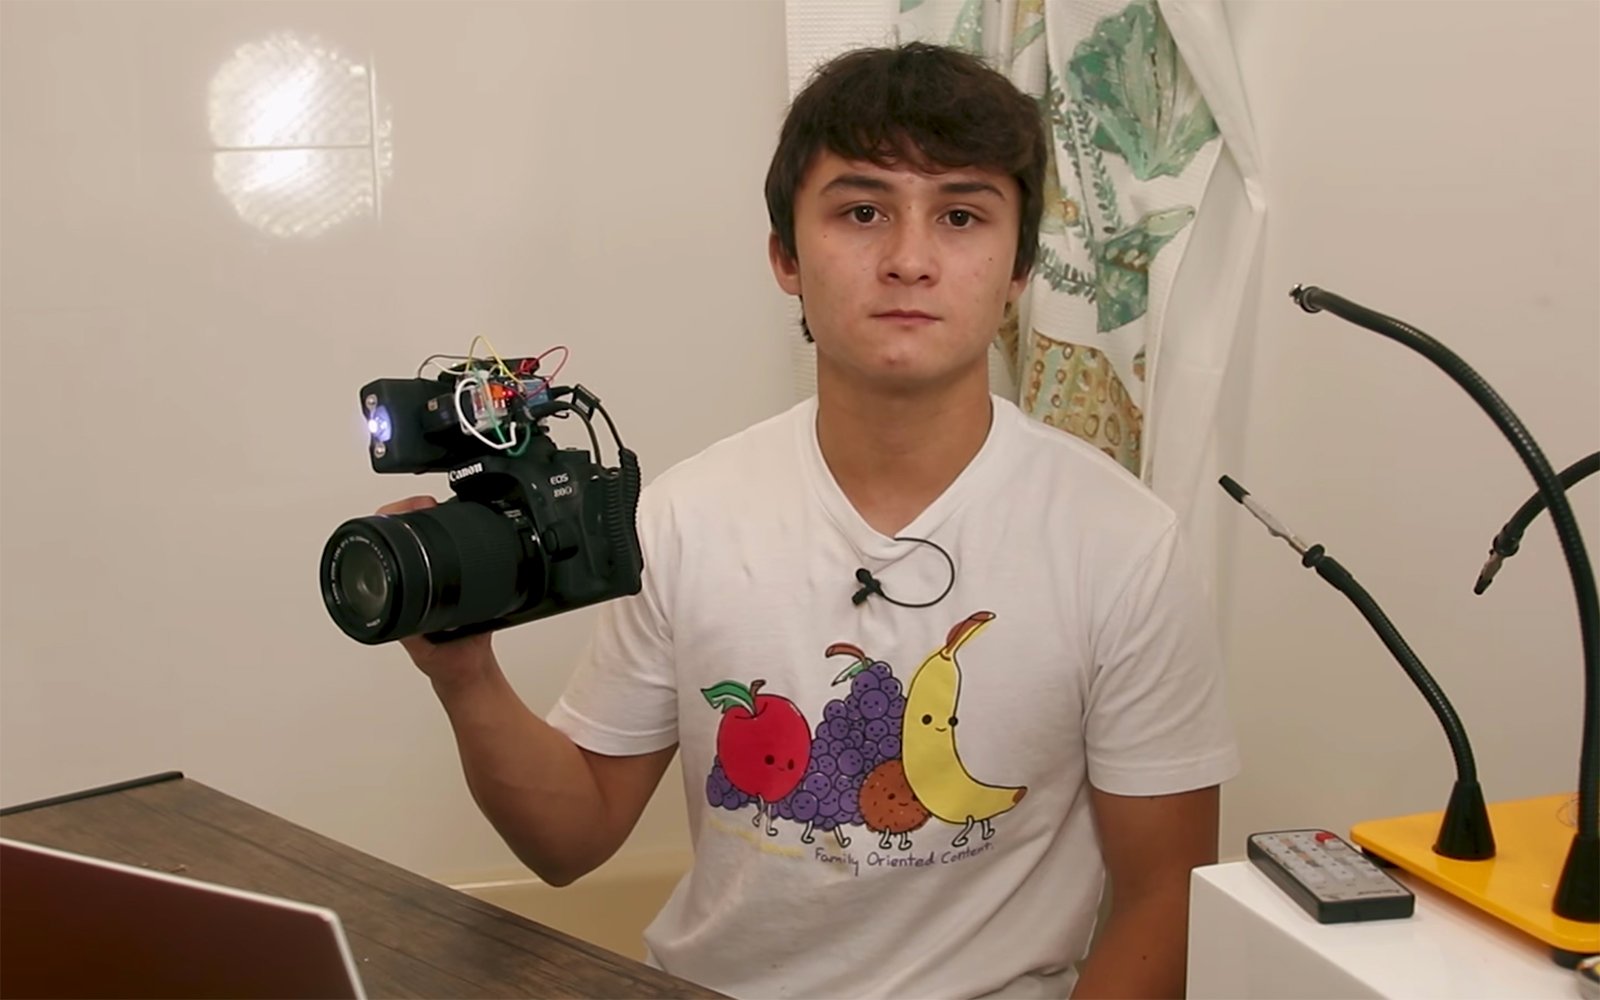  guy created tazer camera electrocutes his 